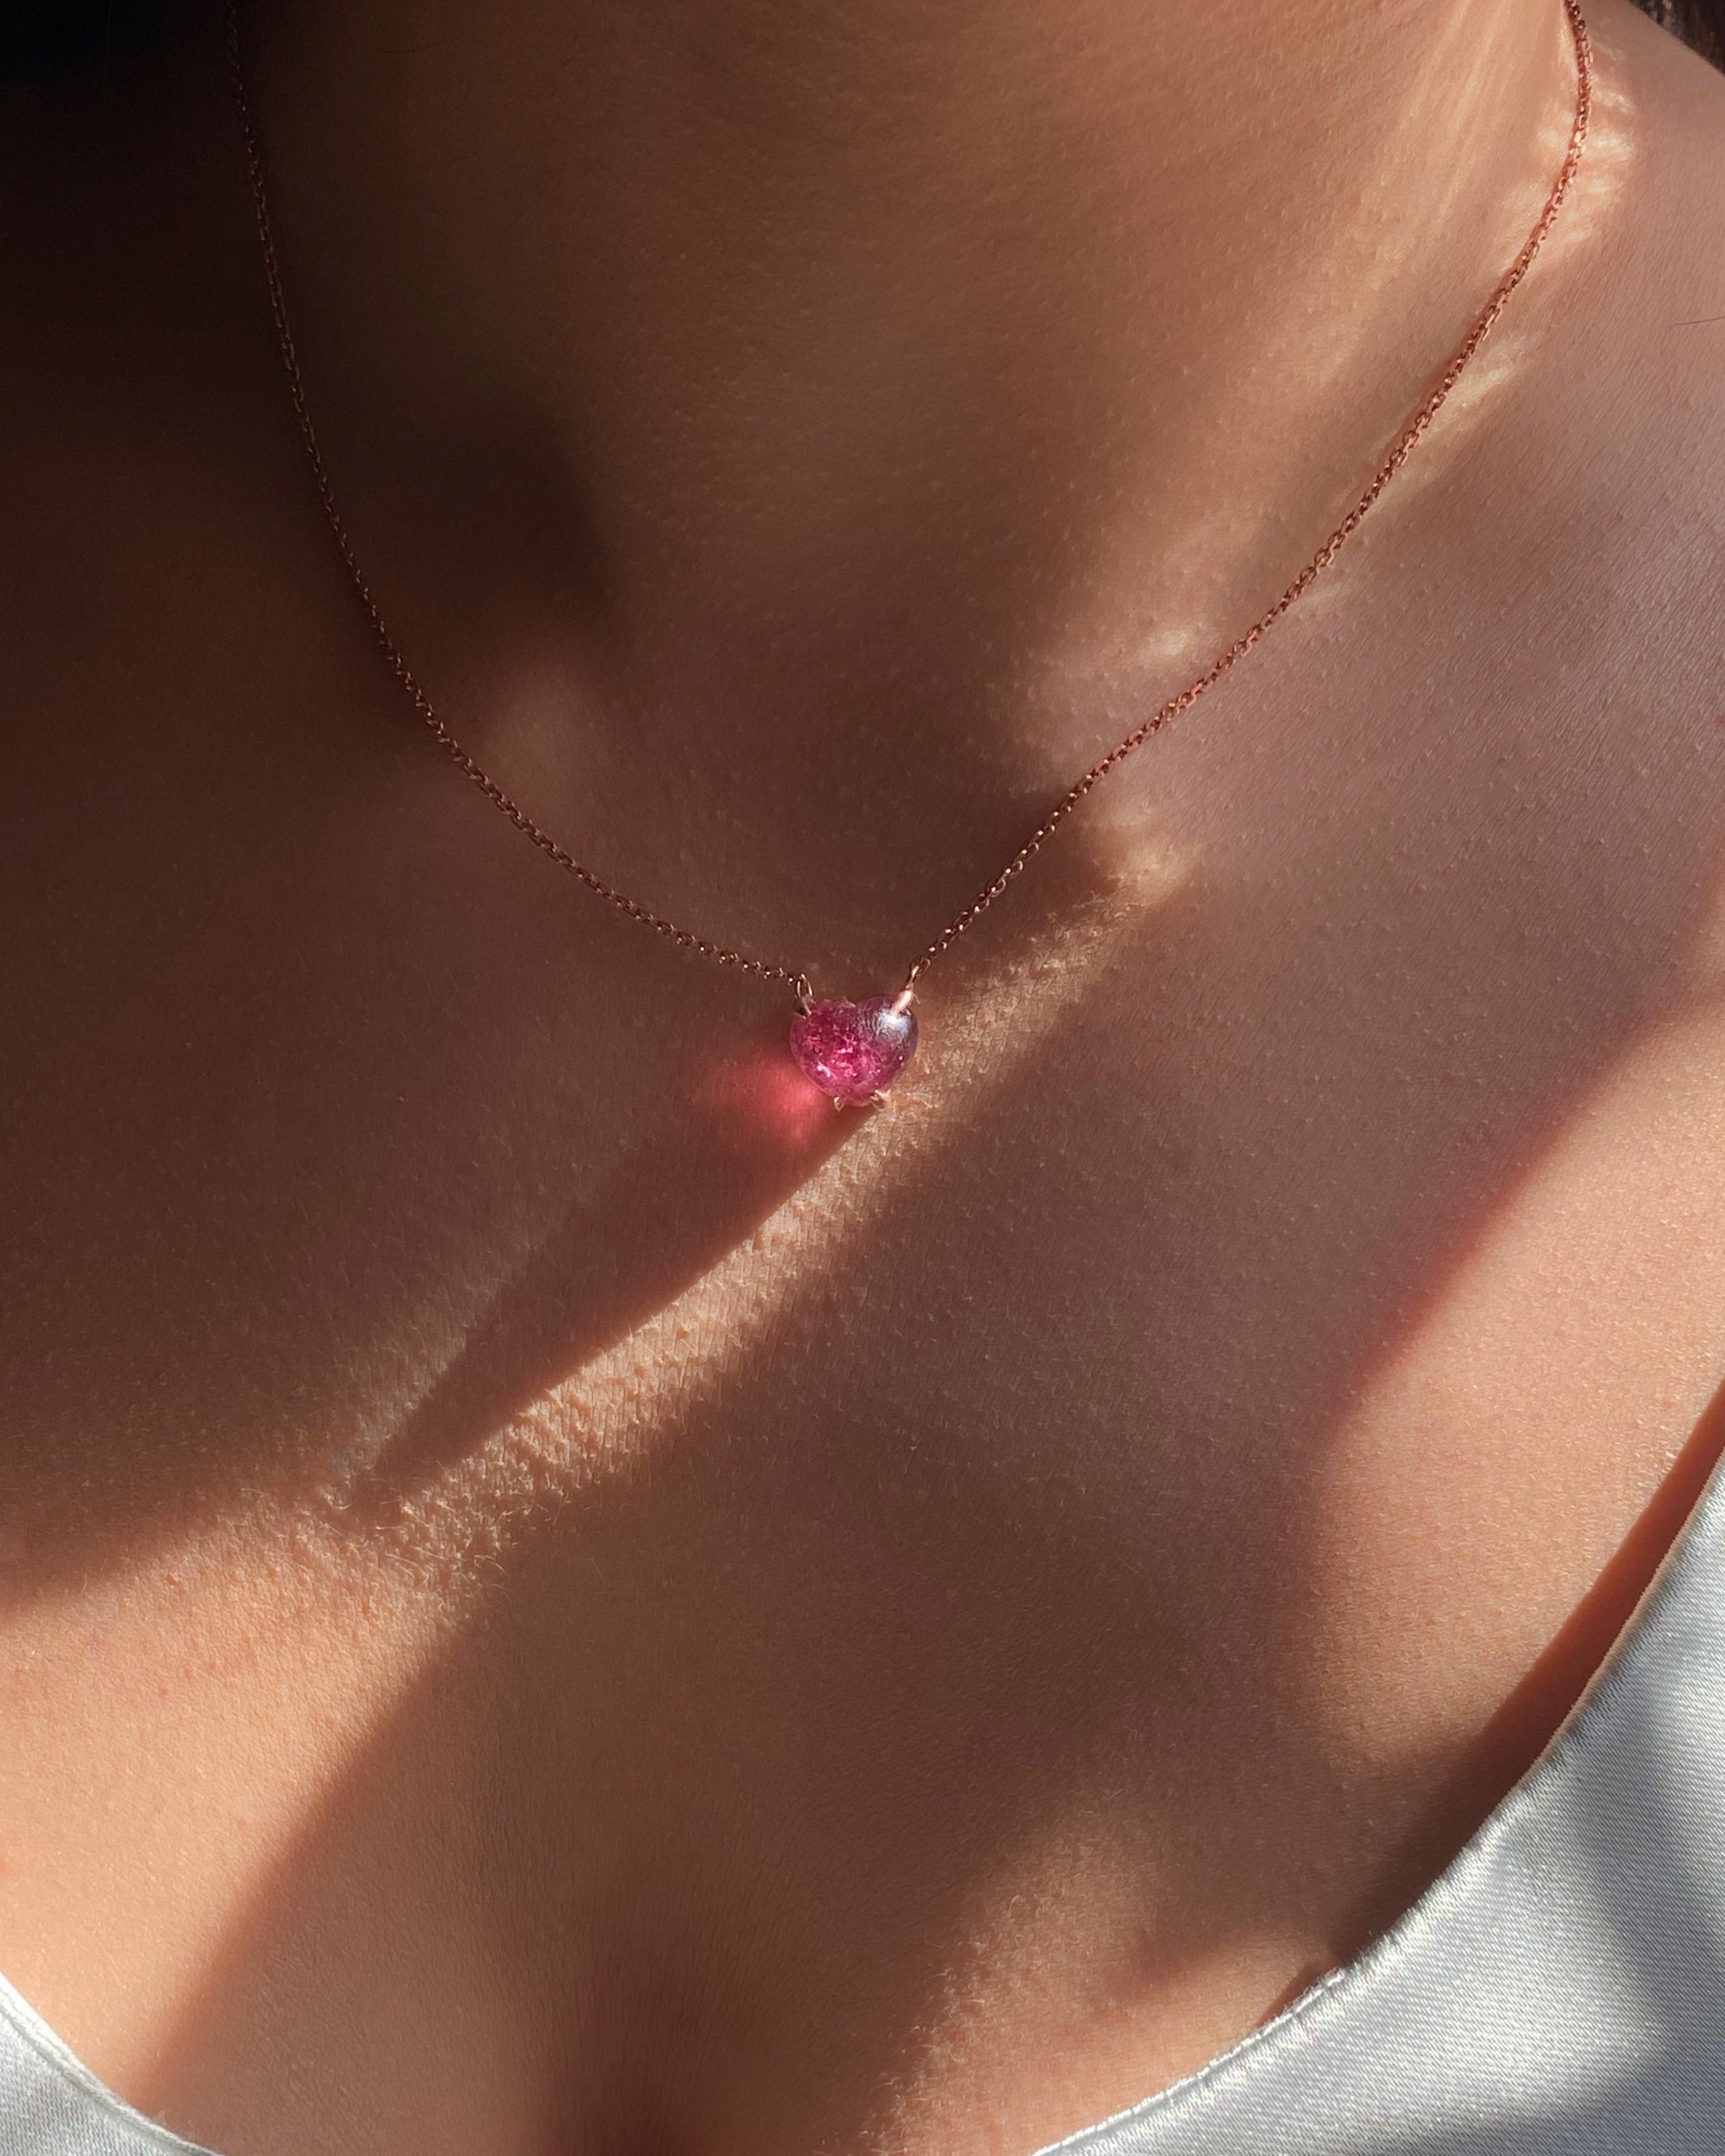 This Morning The Sun Rose, Pink World Tourmaline & Diamond Necklace